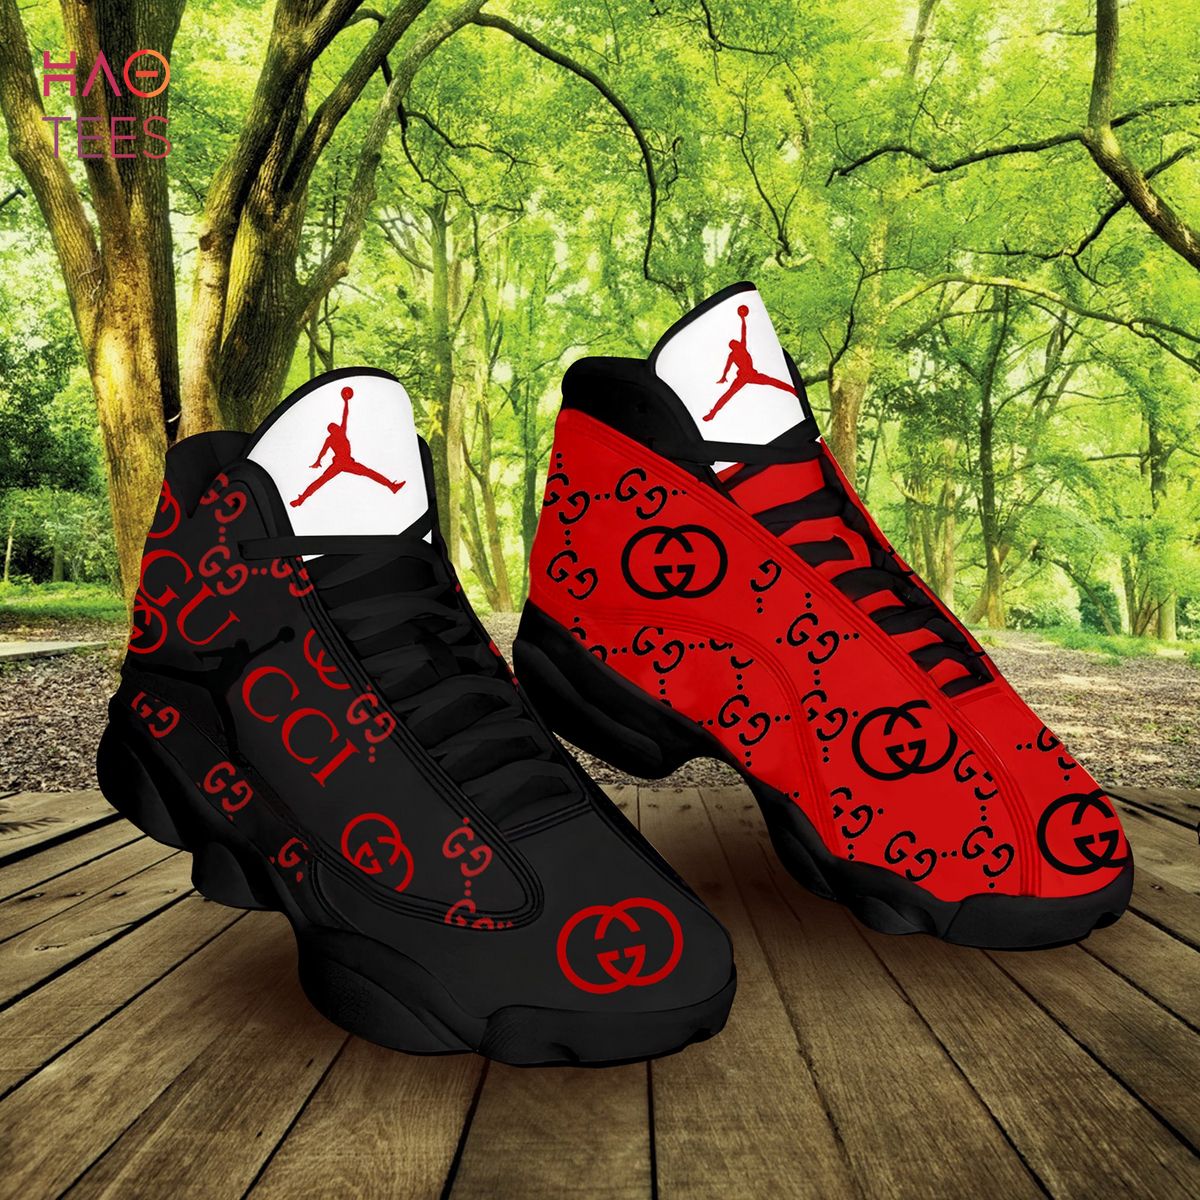 Jumpman Red Gucci Sneakers Air Jordan 13 Gucci Sport Shoes Gifts